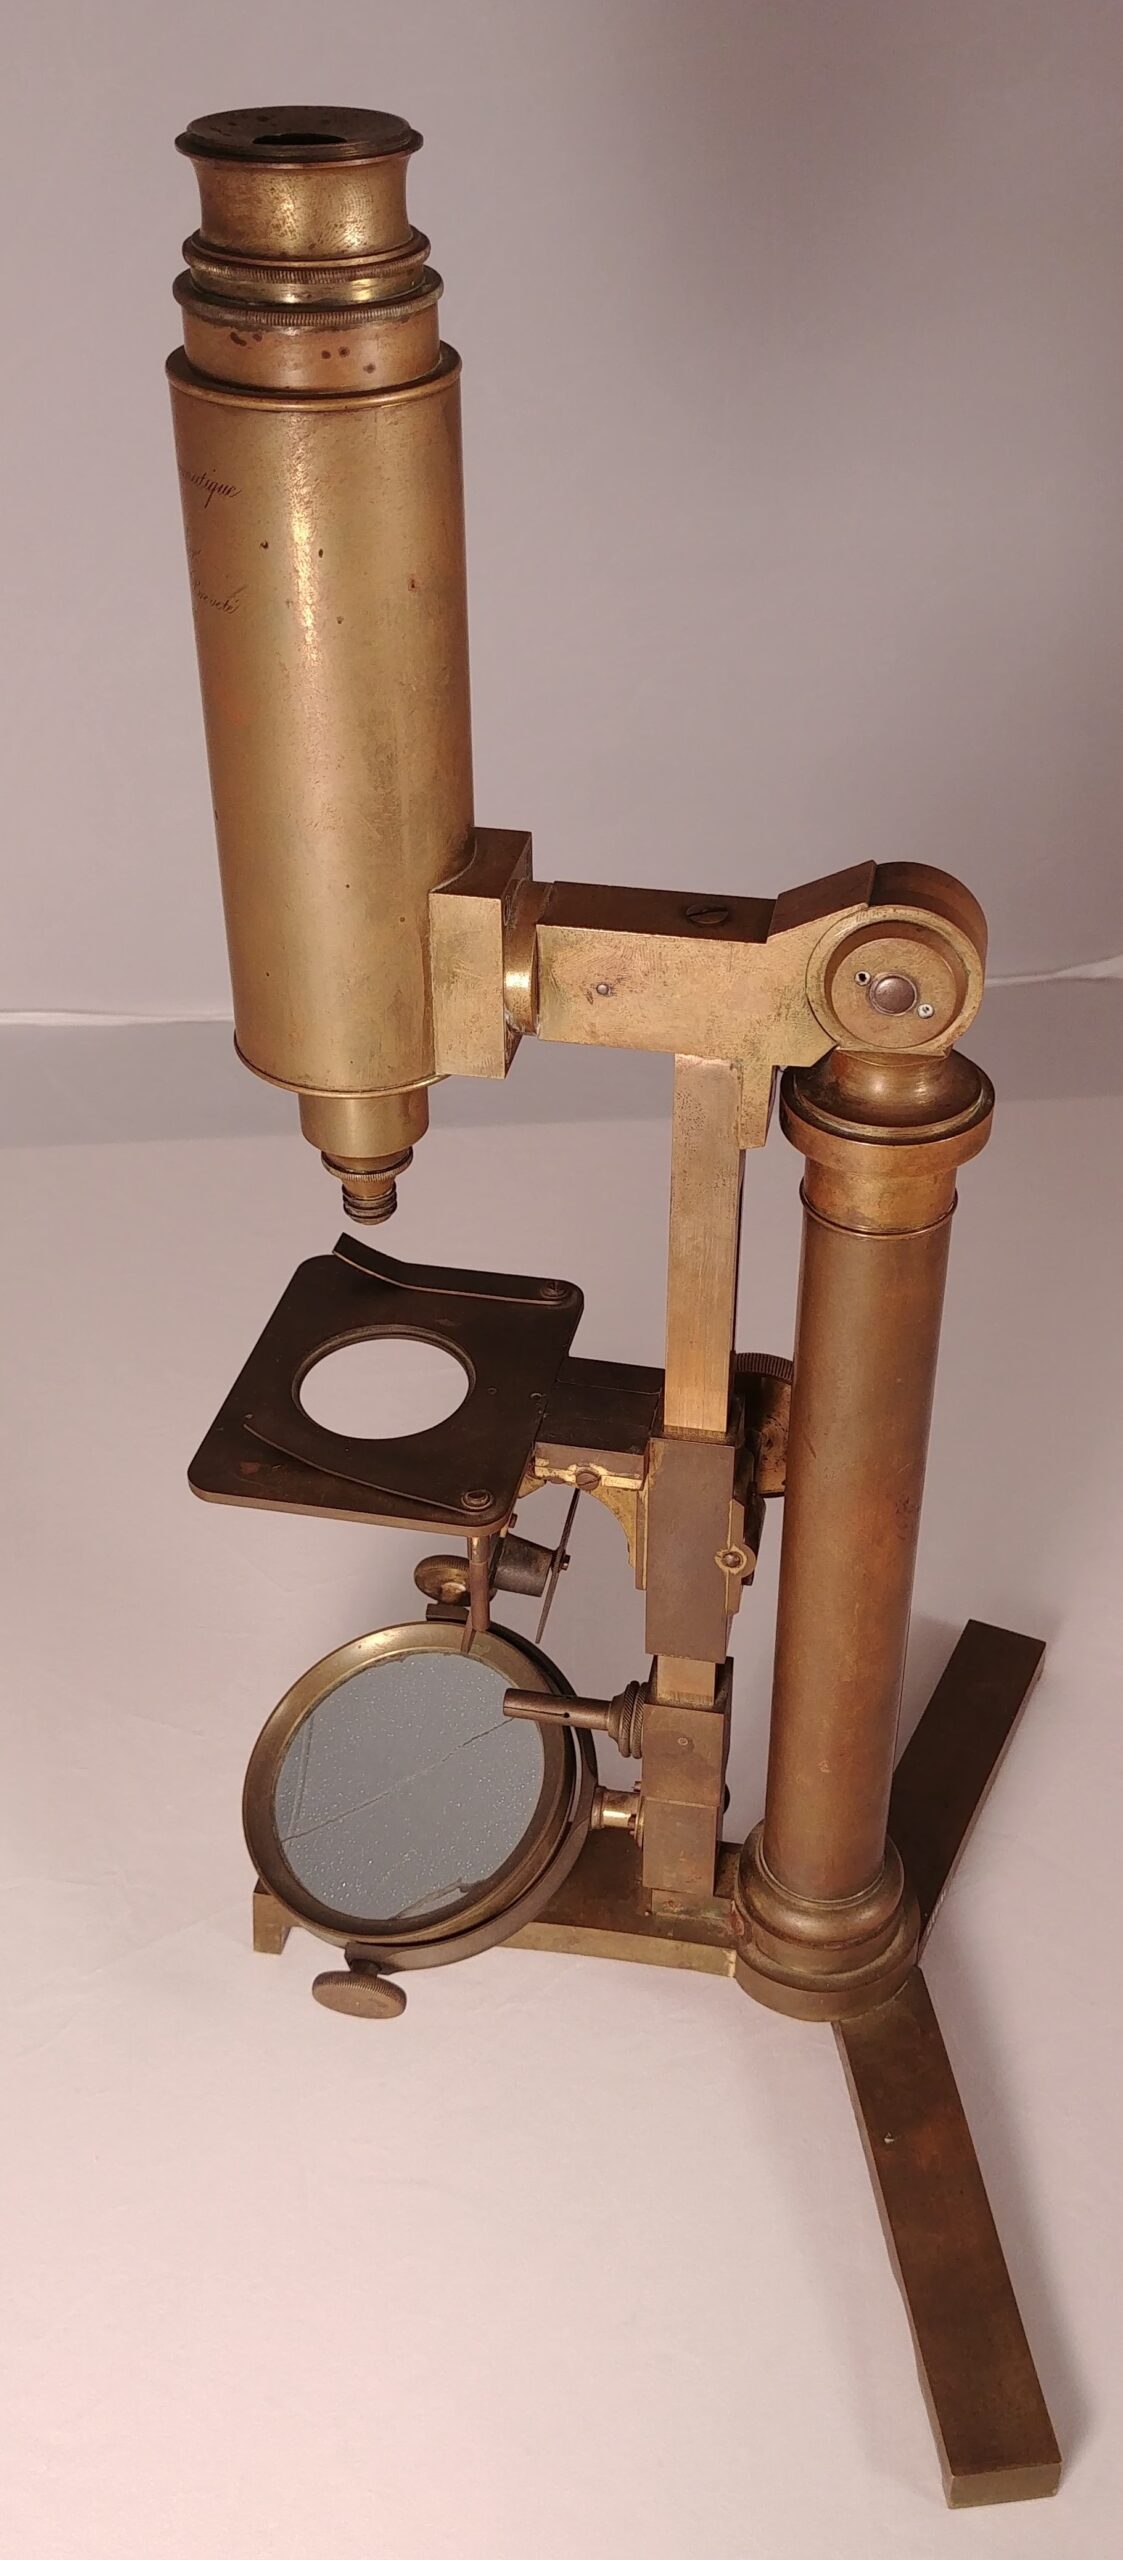 William Sullivant's microscope